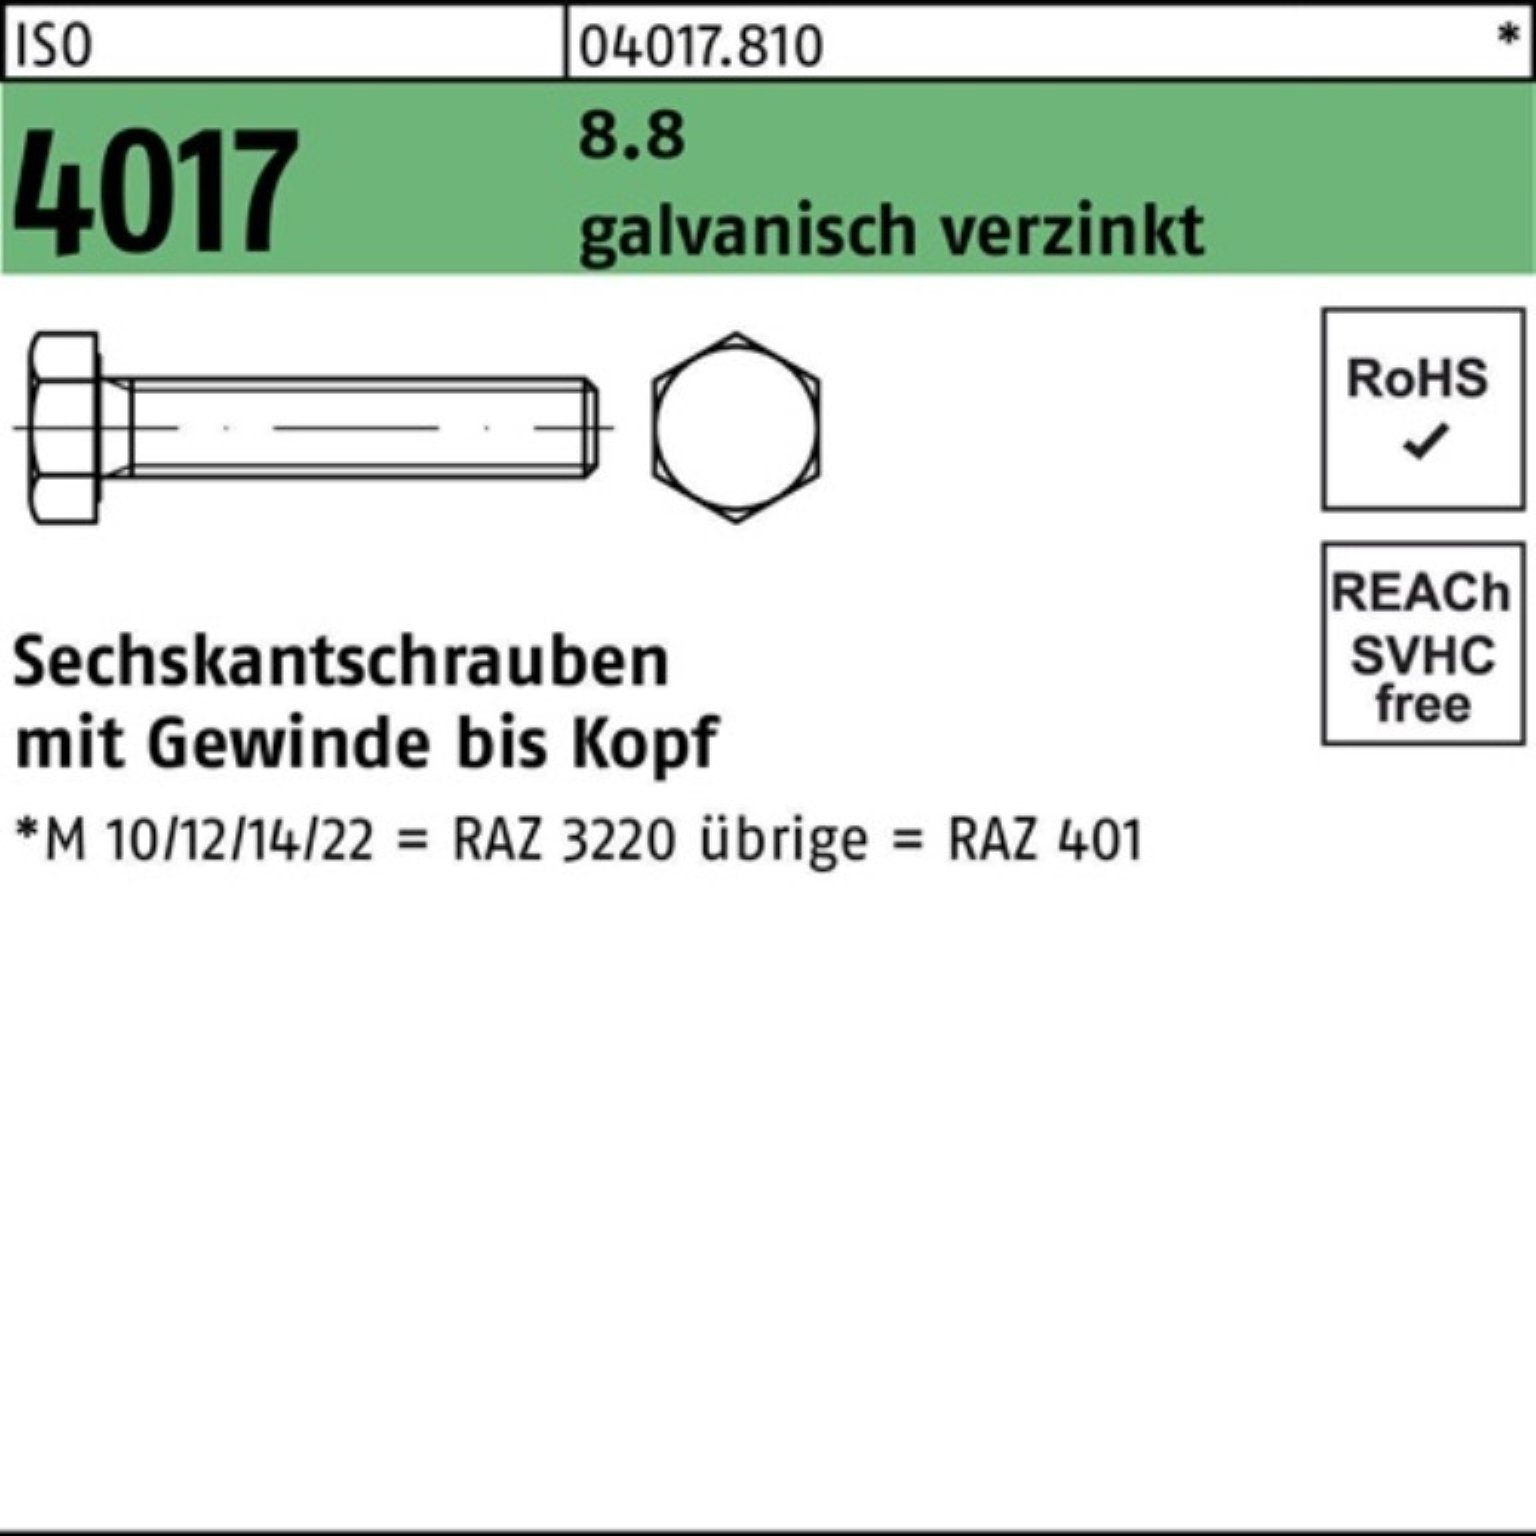 Bufab Sechskantschraube 100er Pack 320 VG 8.8 1 galv.verz. ISO St 4017 Sechskantschraube M24x